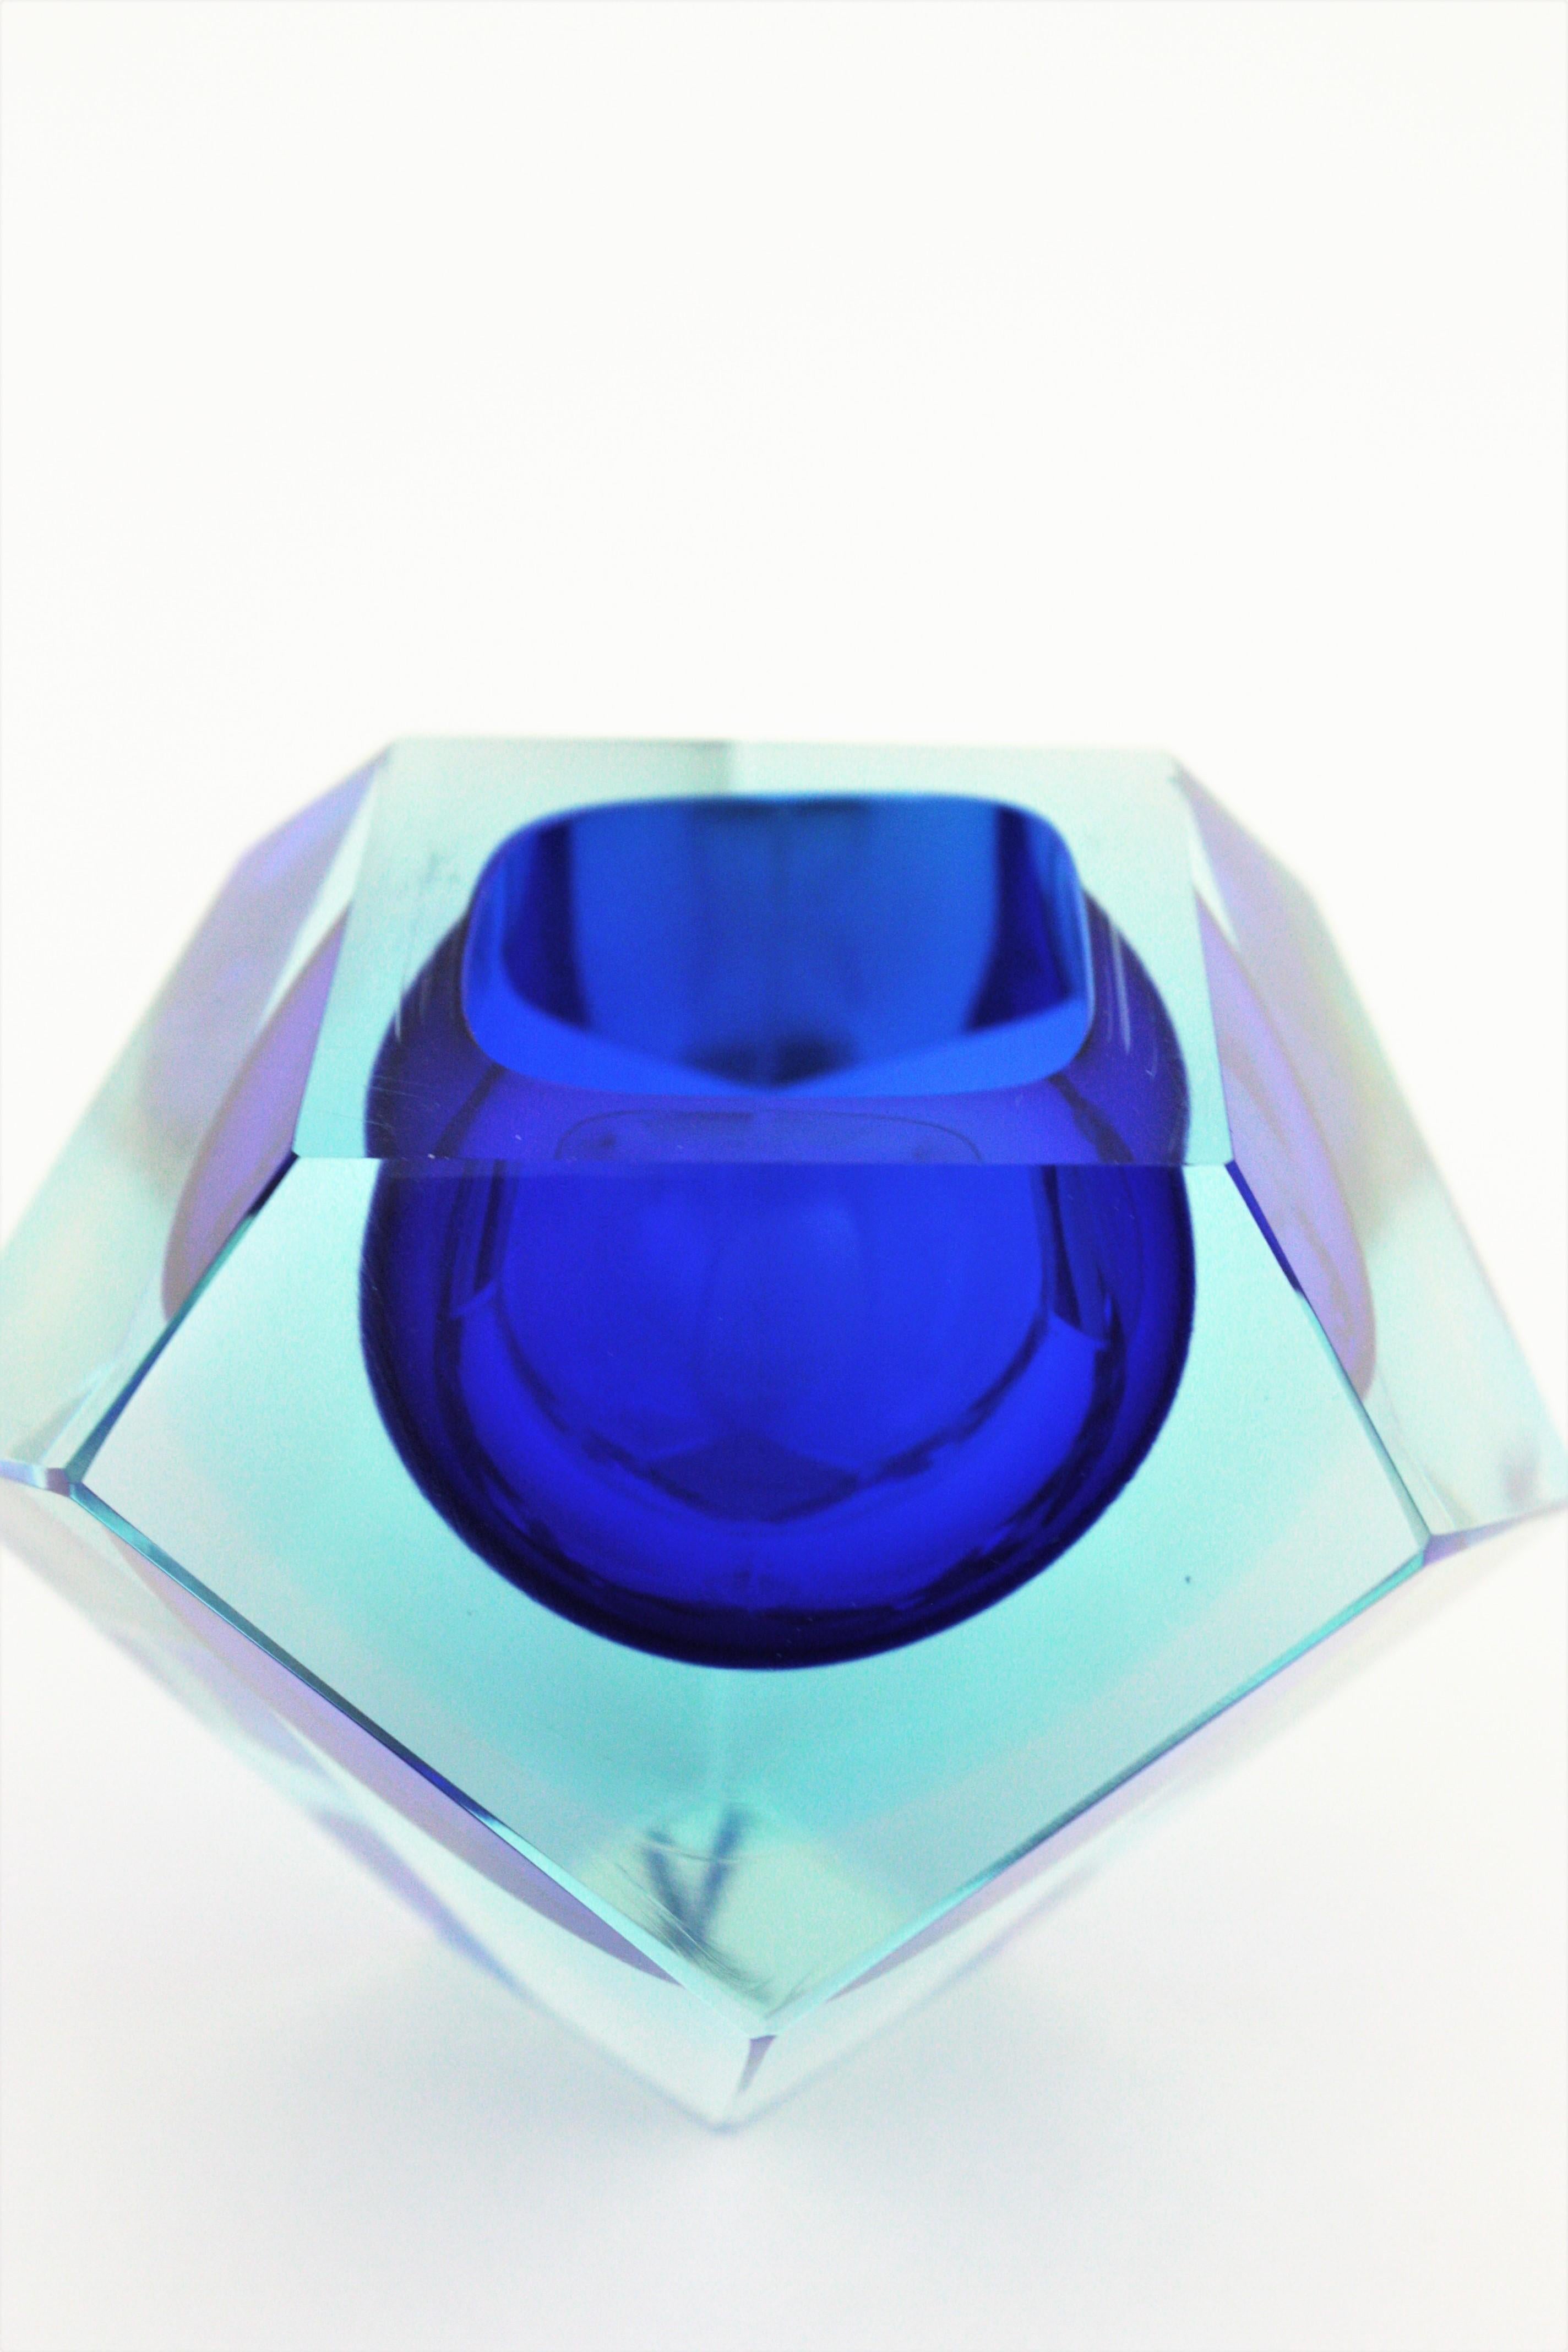 Flavio Poli Murano Blue Sommerso Faceted Art Glass Bowl 3